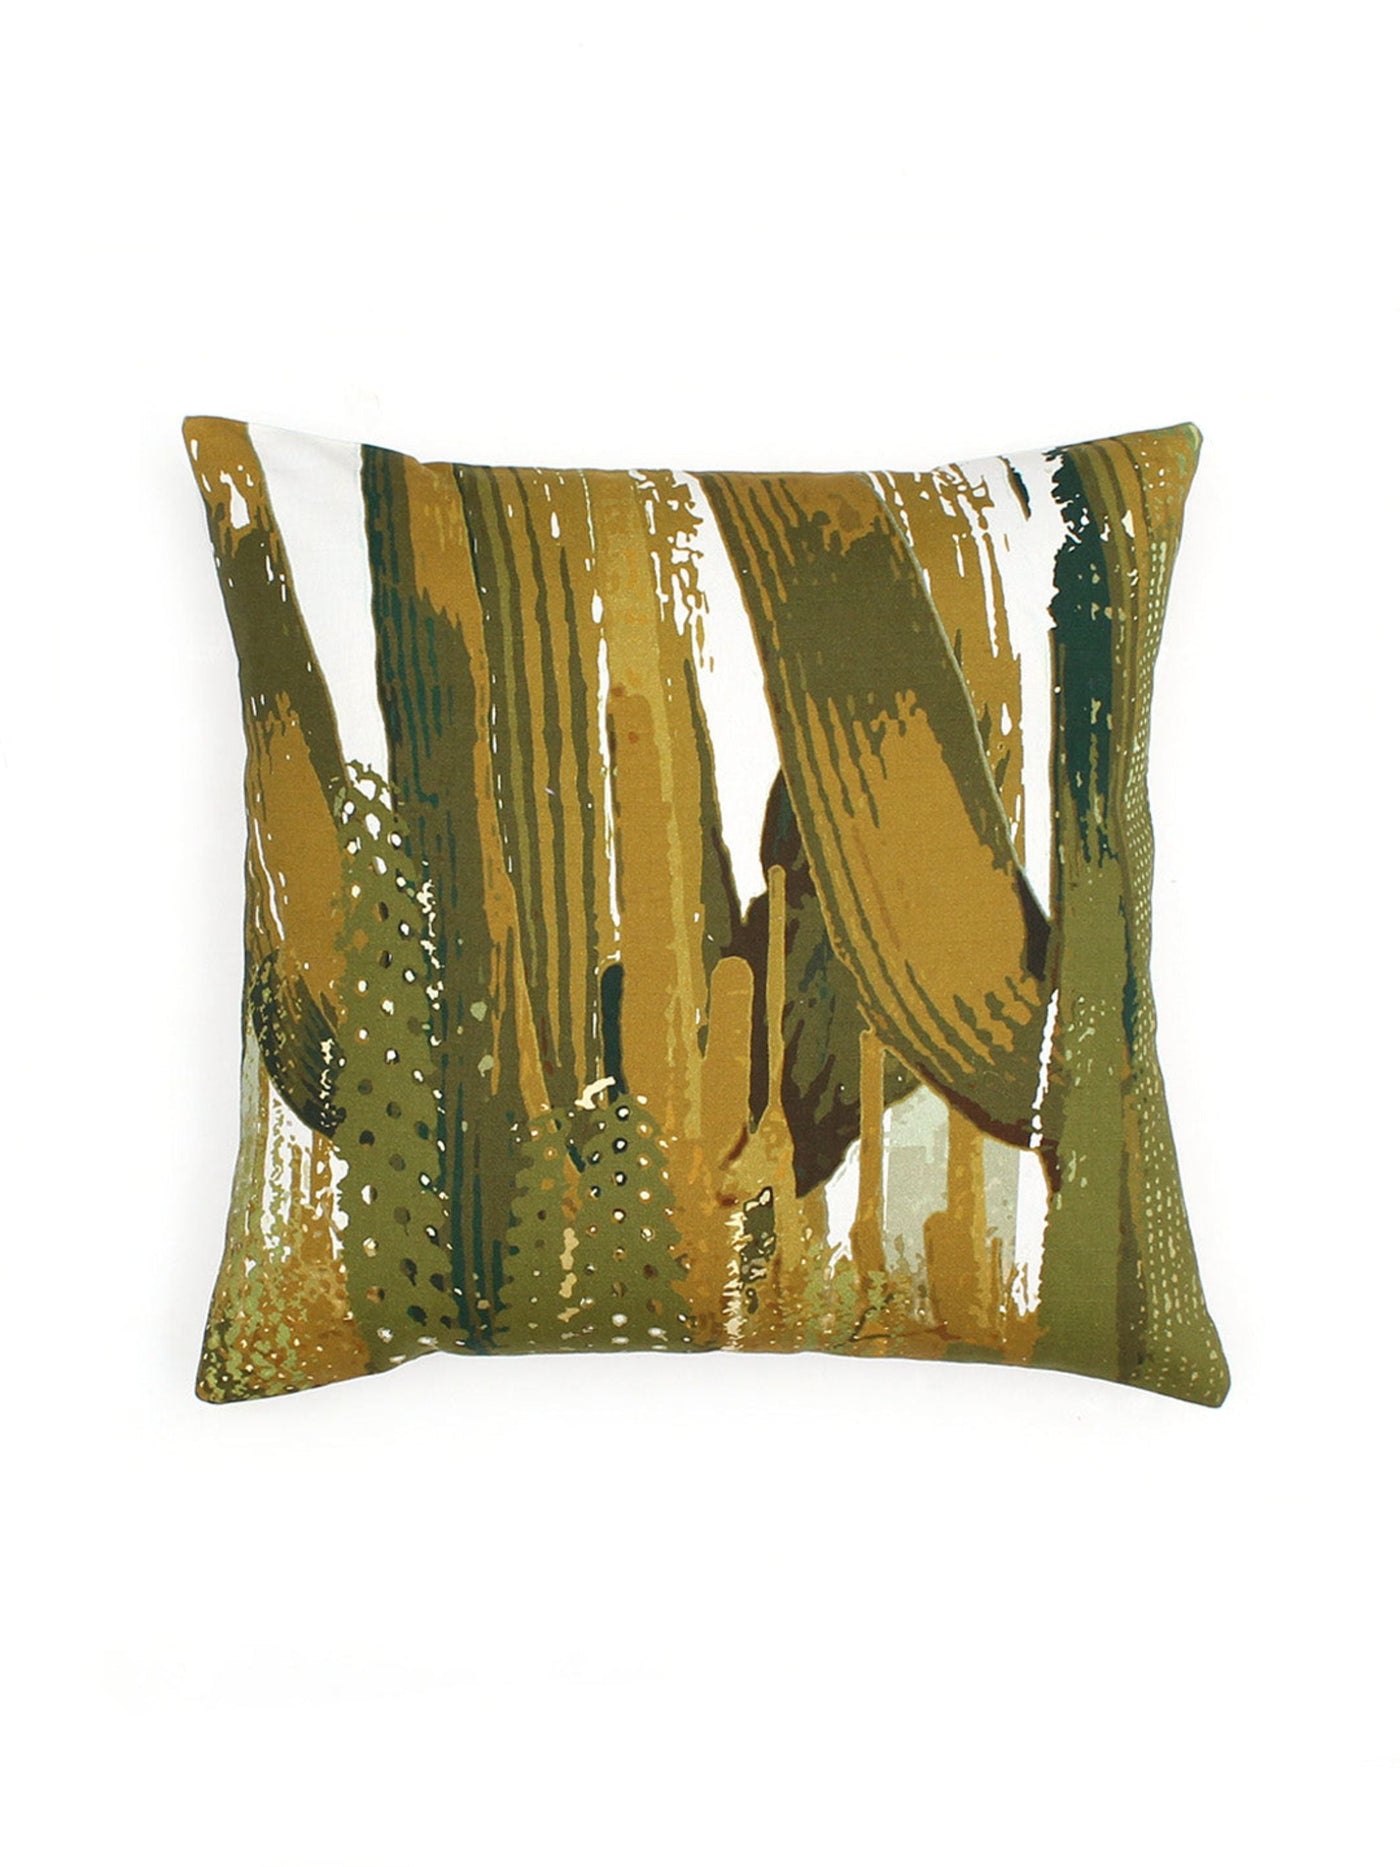 Arizona Saguaro Cushion Cover - Green